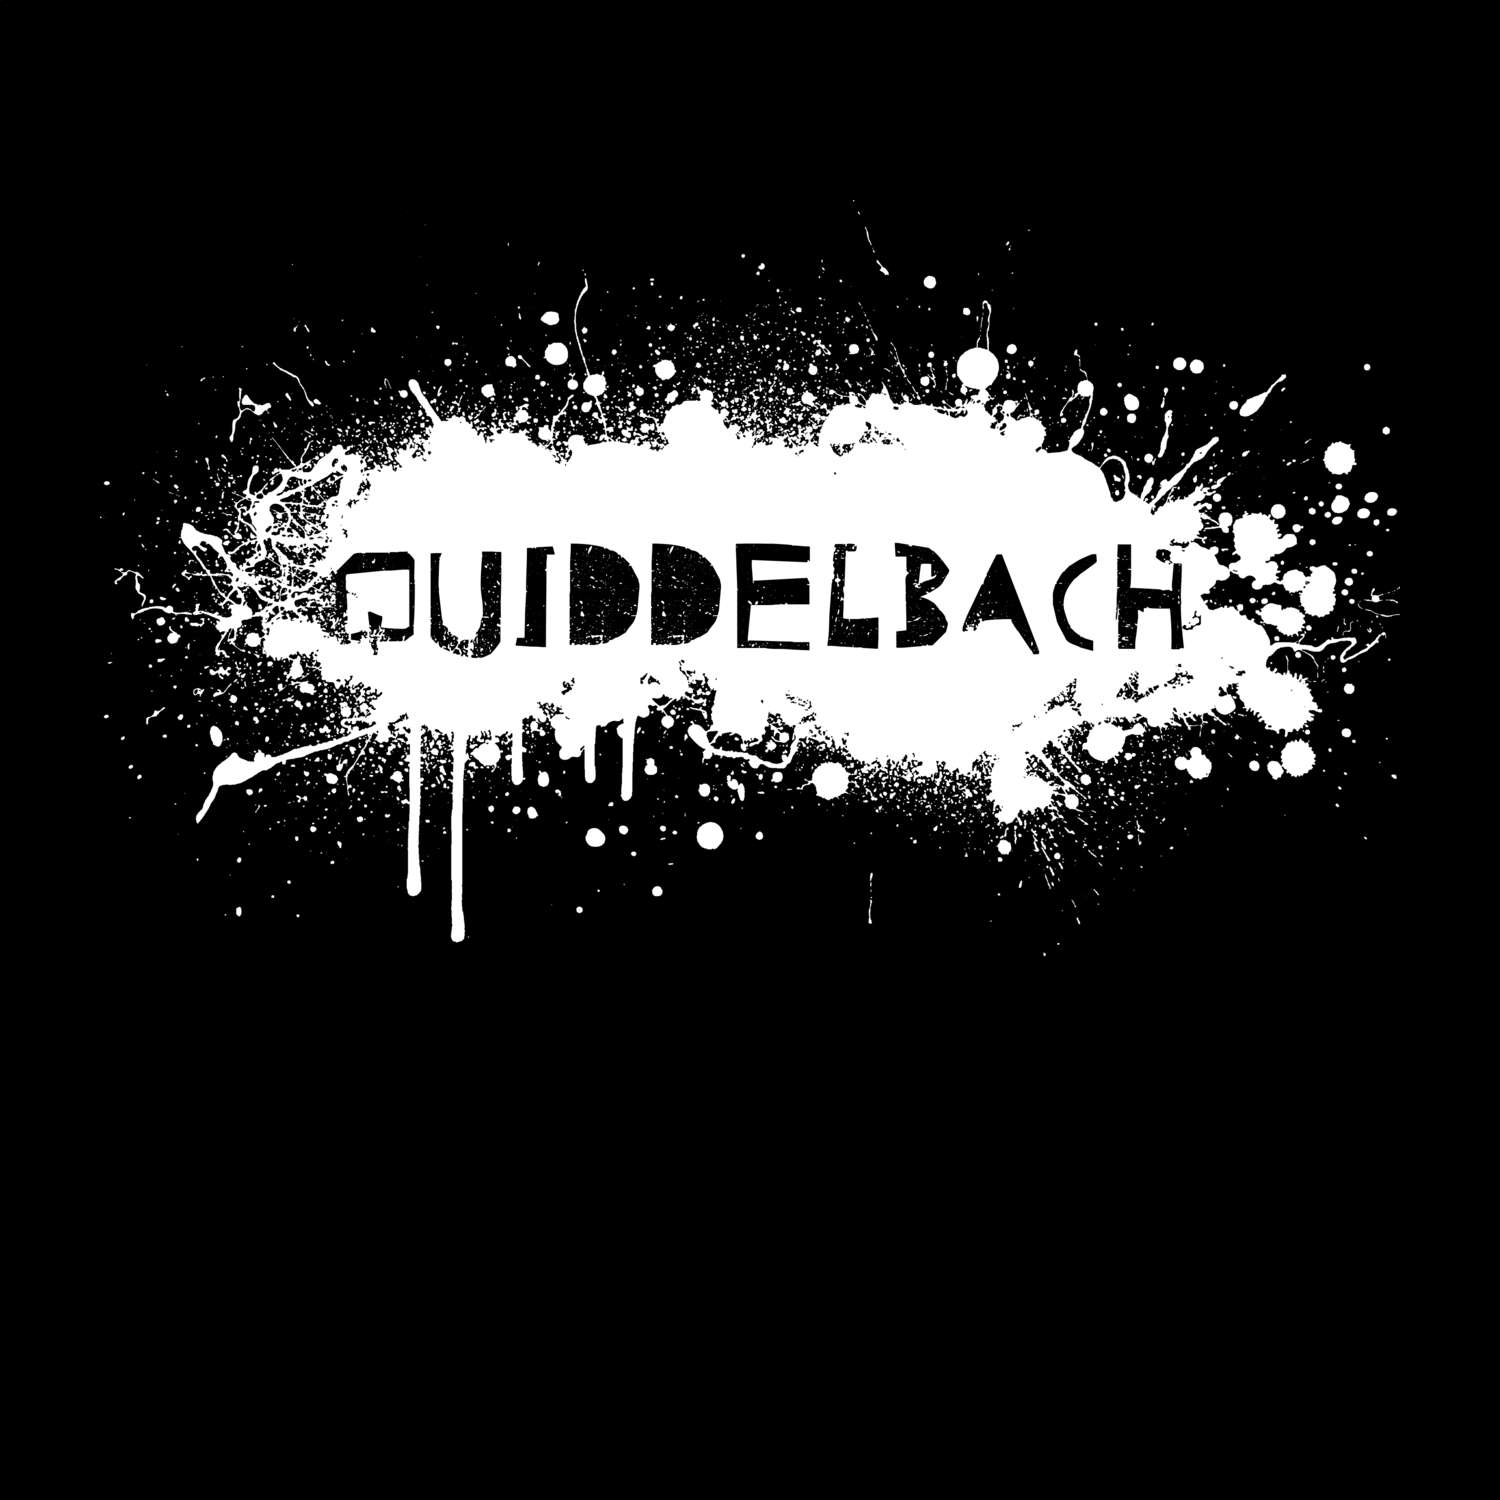 Quiddelbach T-Shirt »Paint Splash Punk«